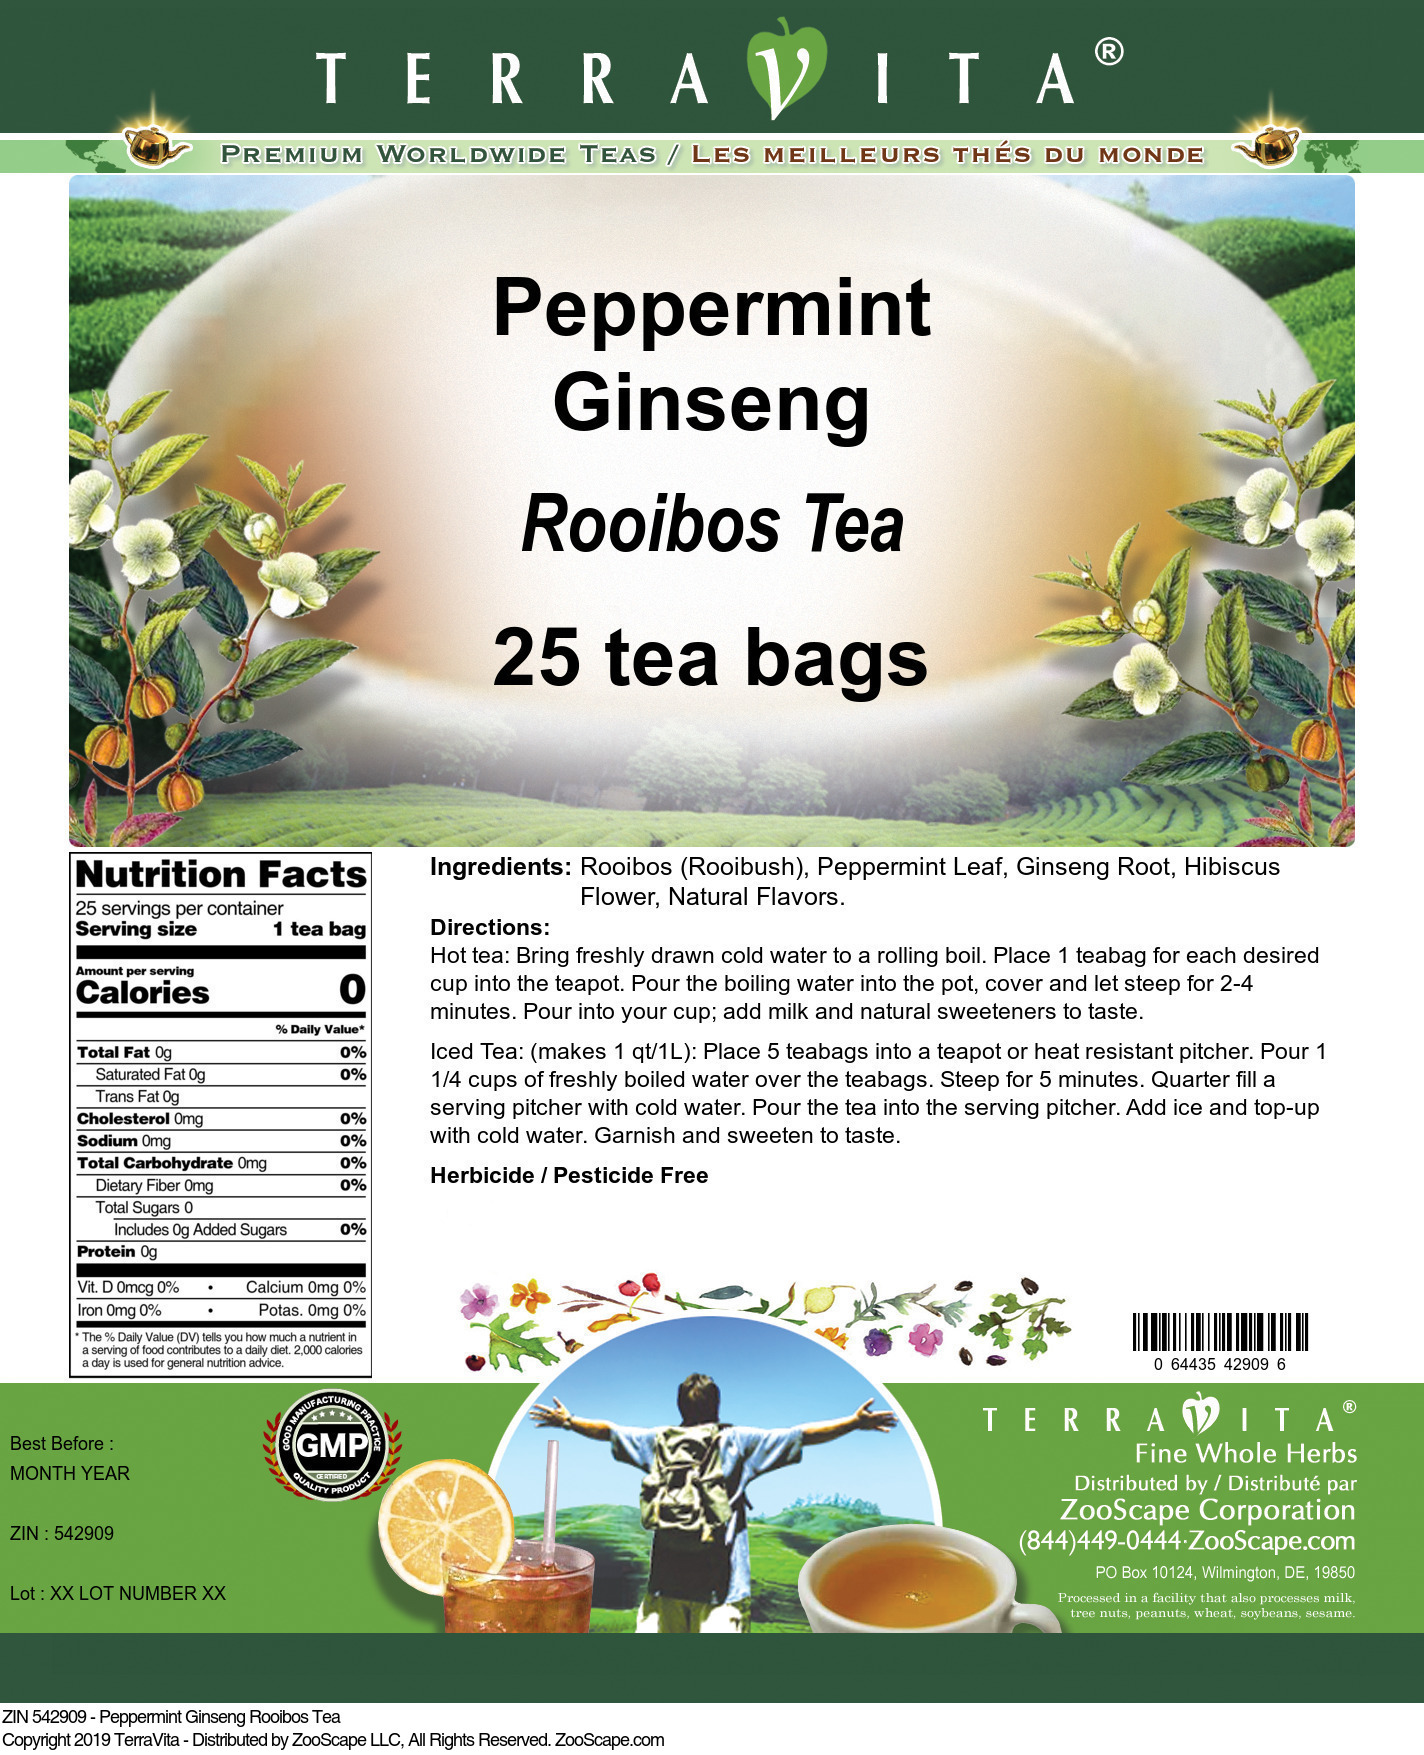 Peppermint Ginseng Rooibos Tea - Label